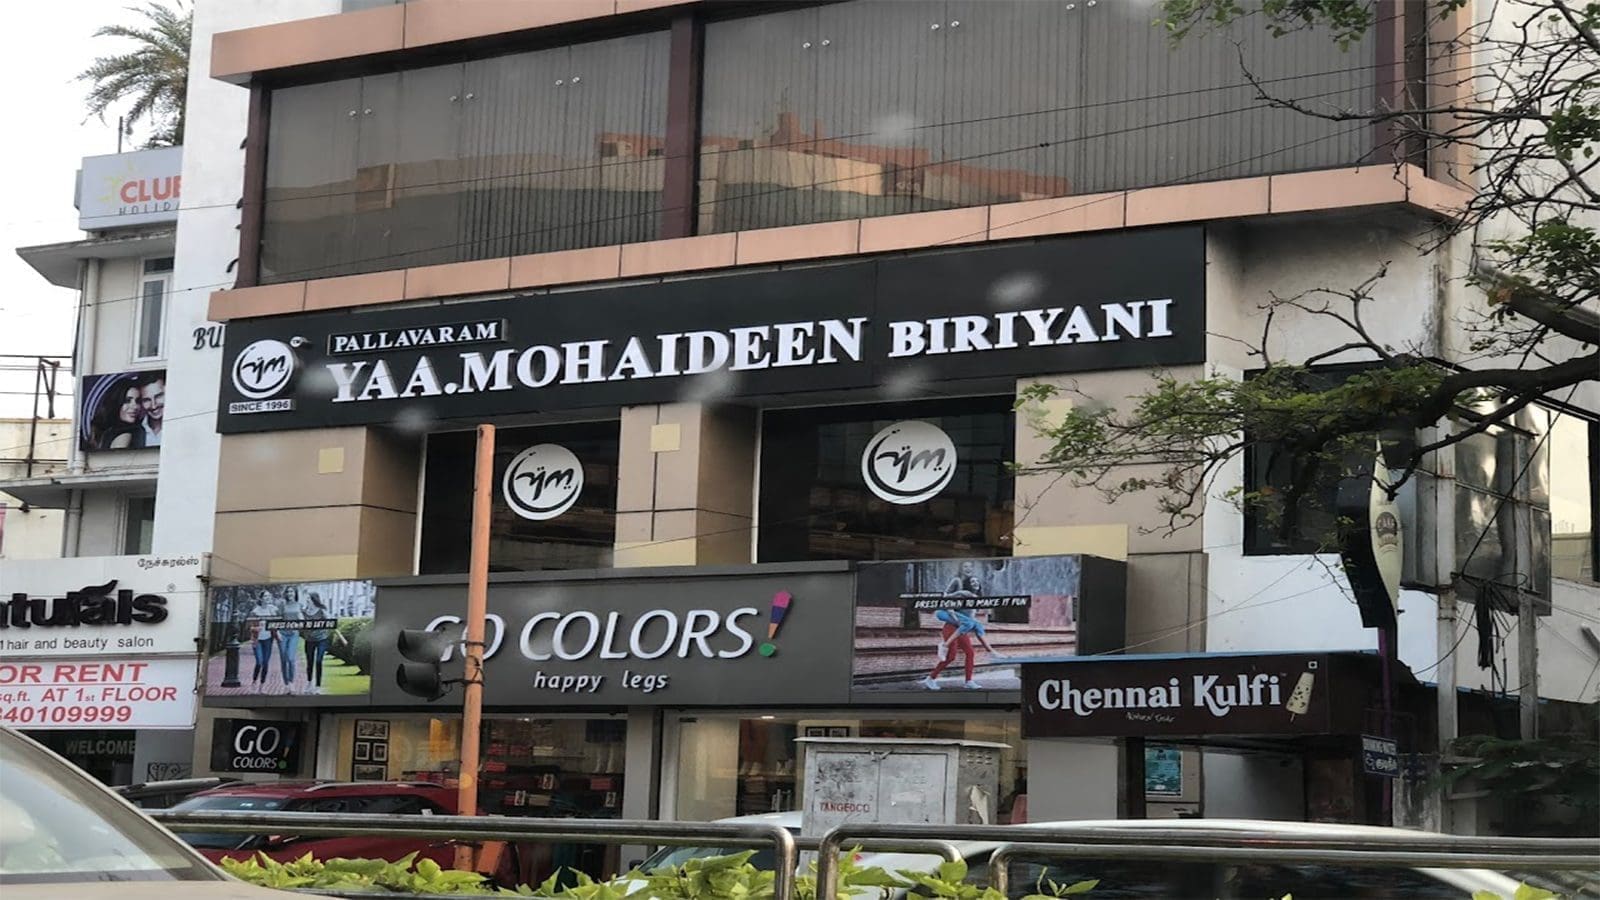 Stale meat discovered in India’s Ya Mohaideen Biryani restaurant